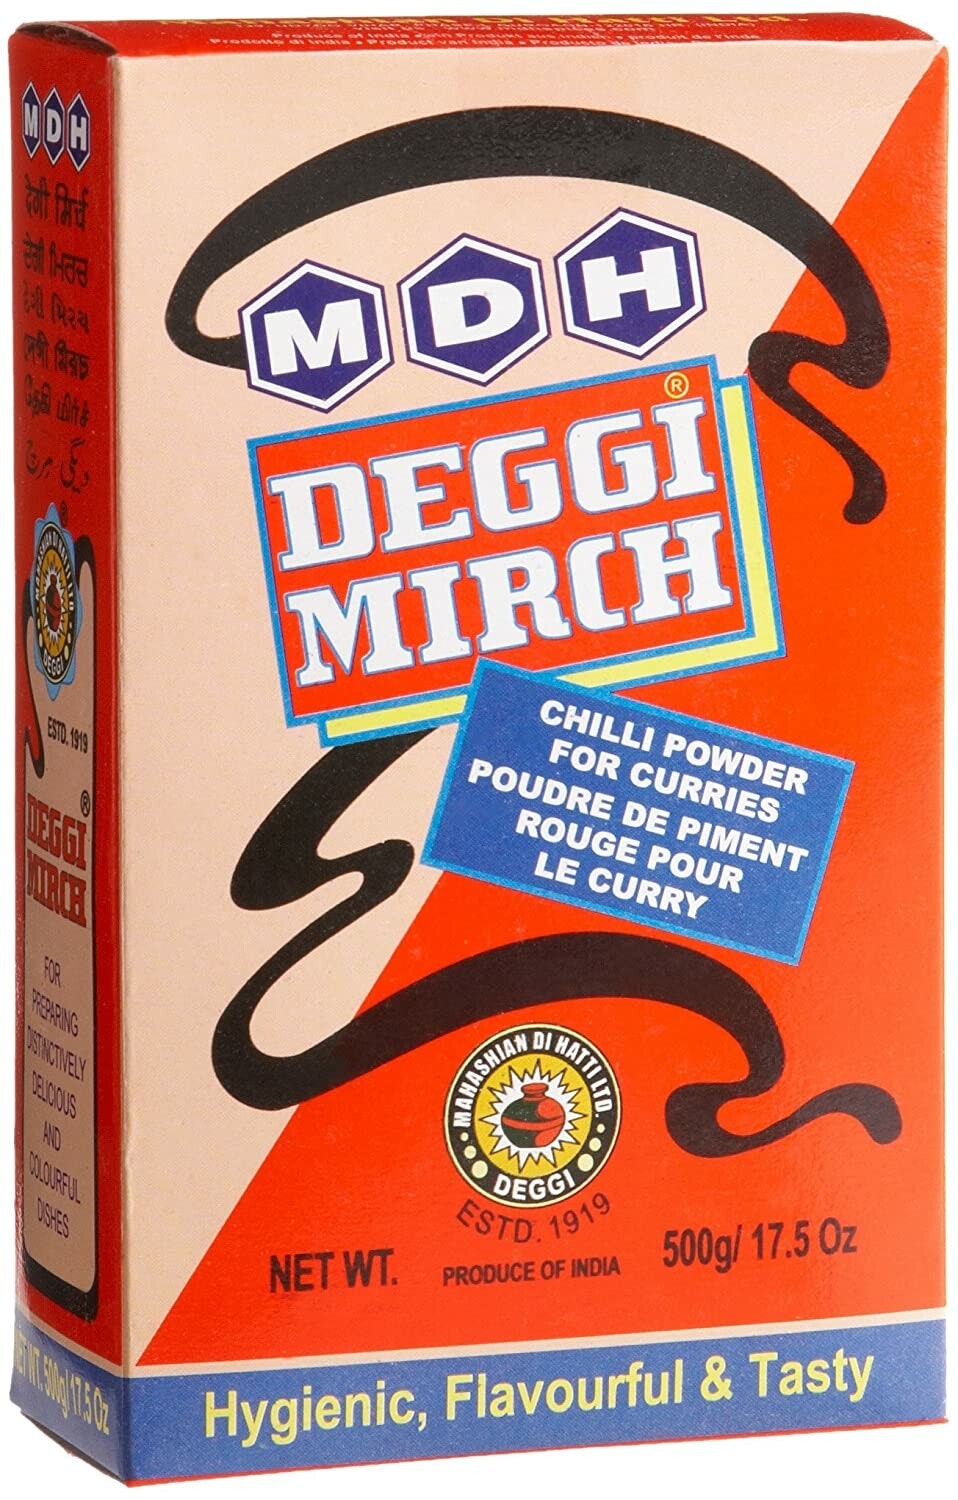 Deggi Mirch (MDH) 100g